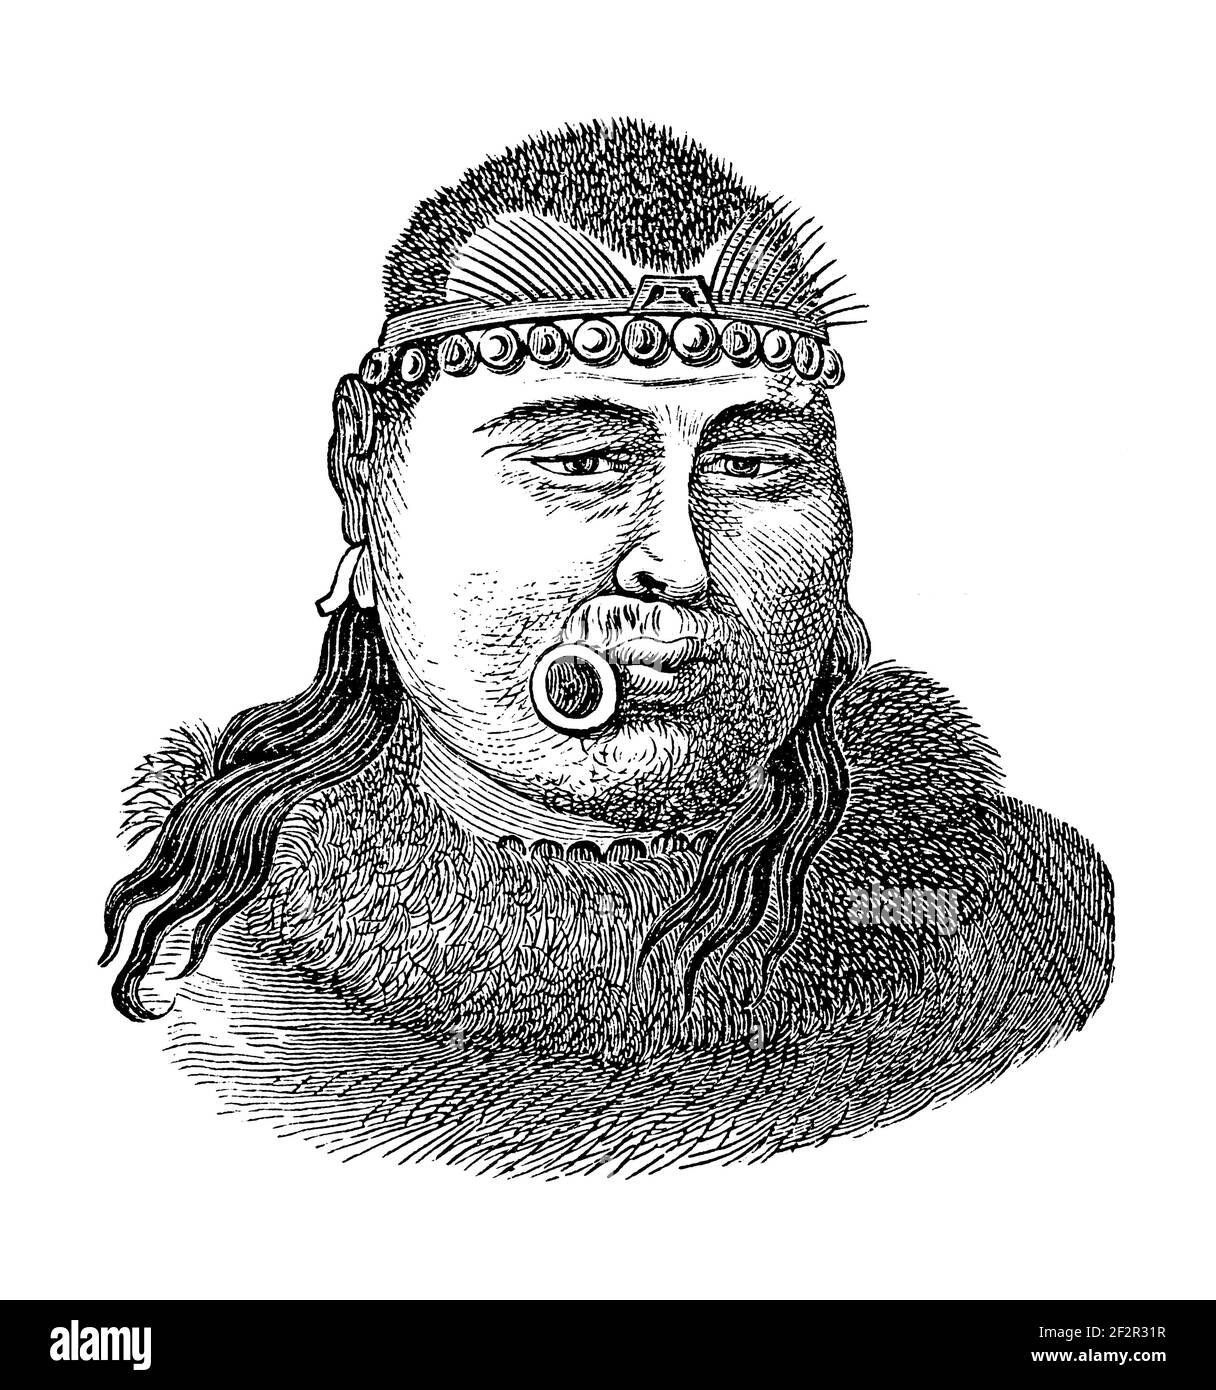 Antique engraving of Inupiat man from Kotzebue, Alaska. Illustration published in Systematischer Bilder-Atlas zum Conversations-Lexikon, Ikonographisc Stock Photo